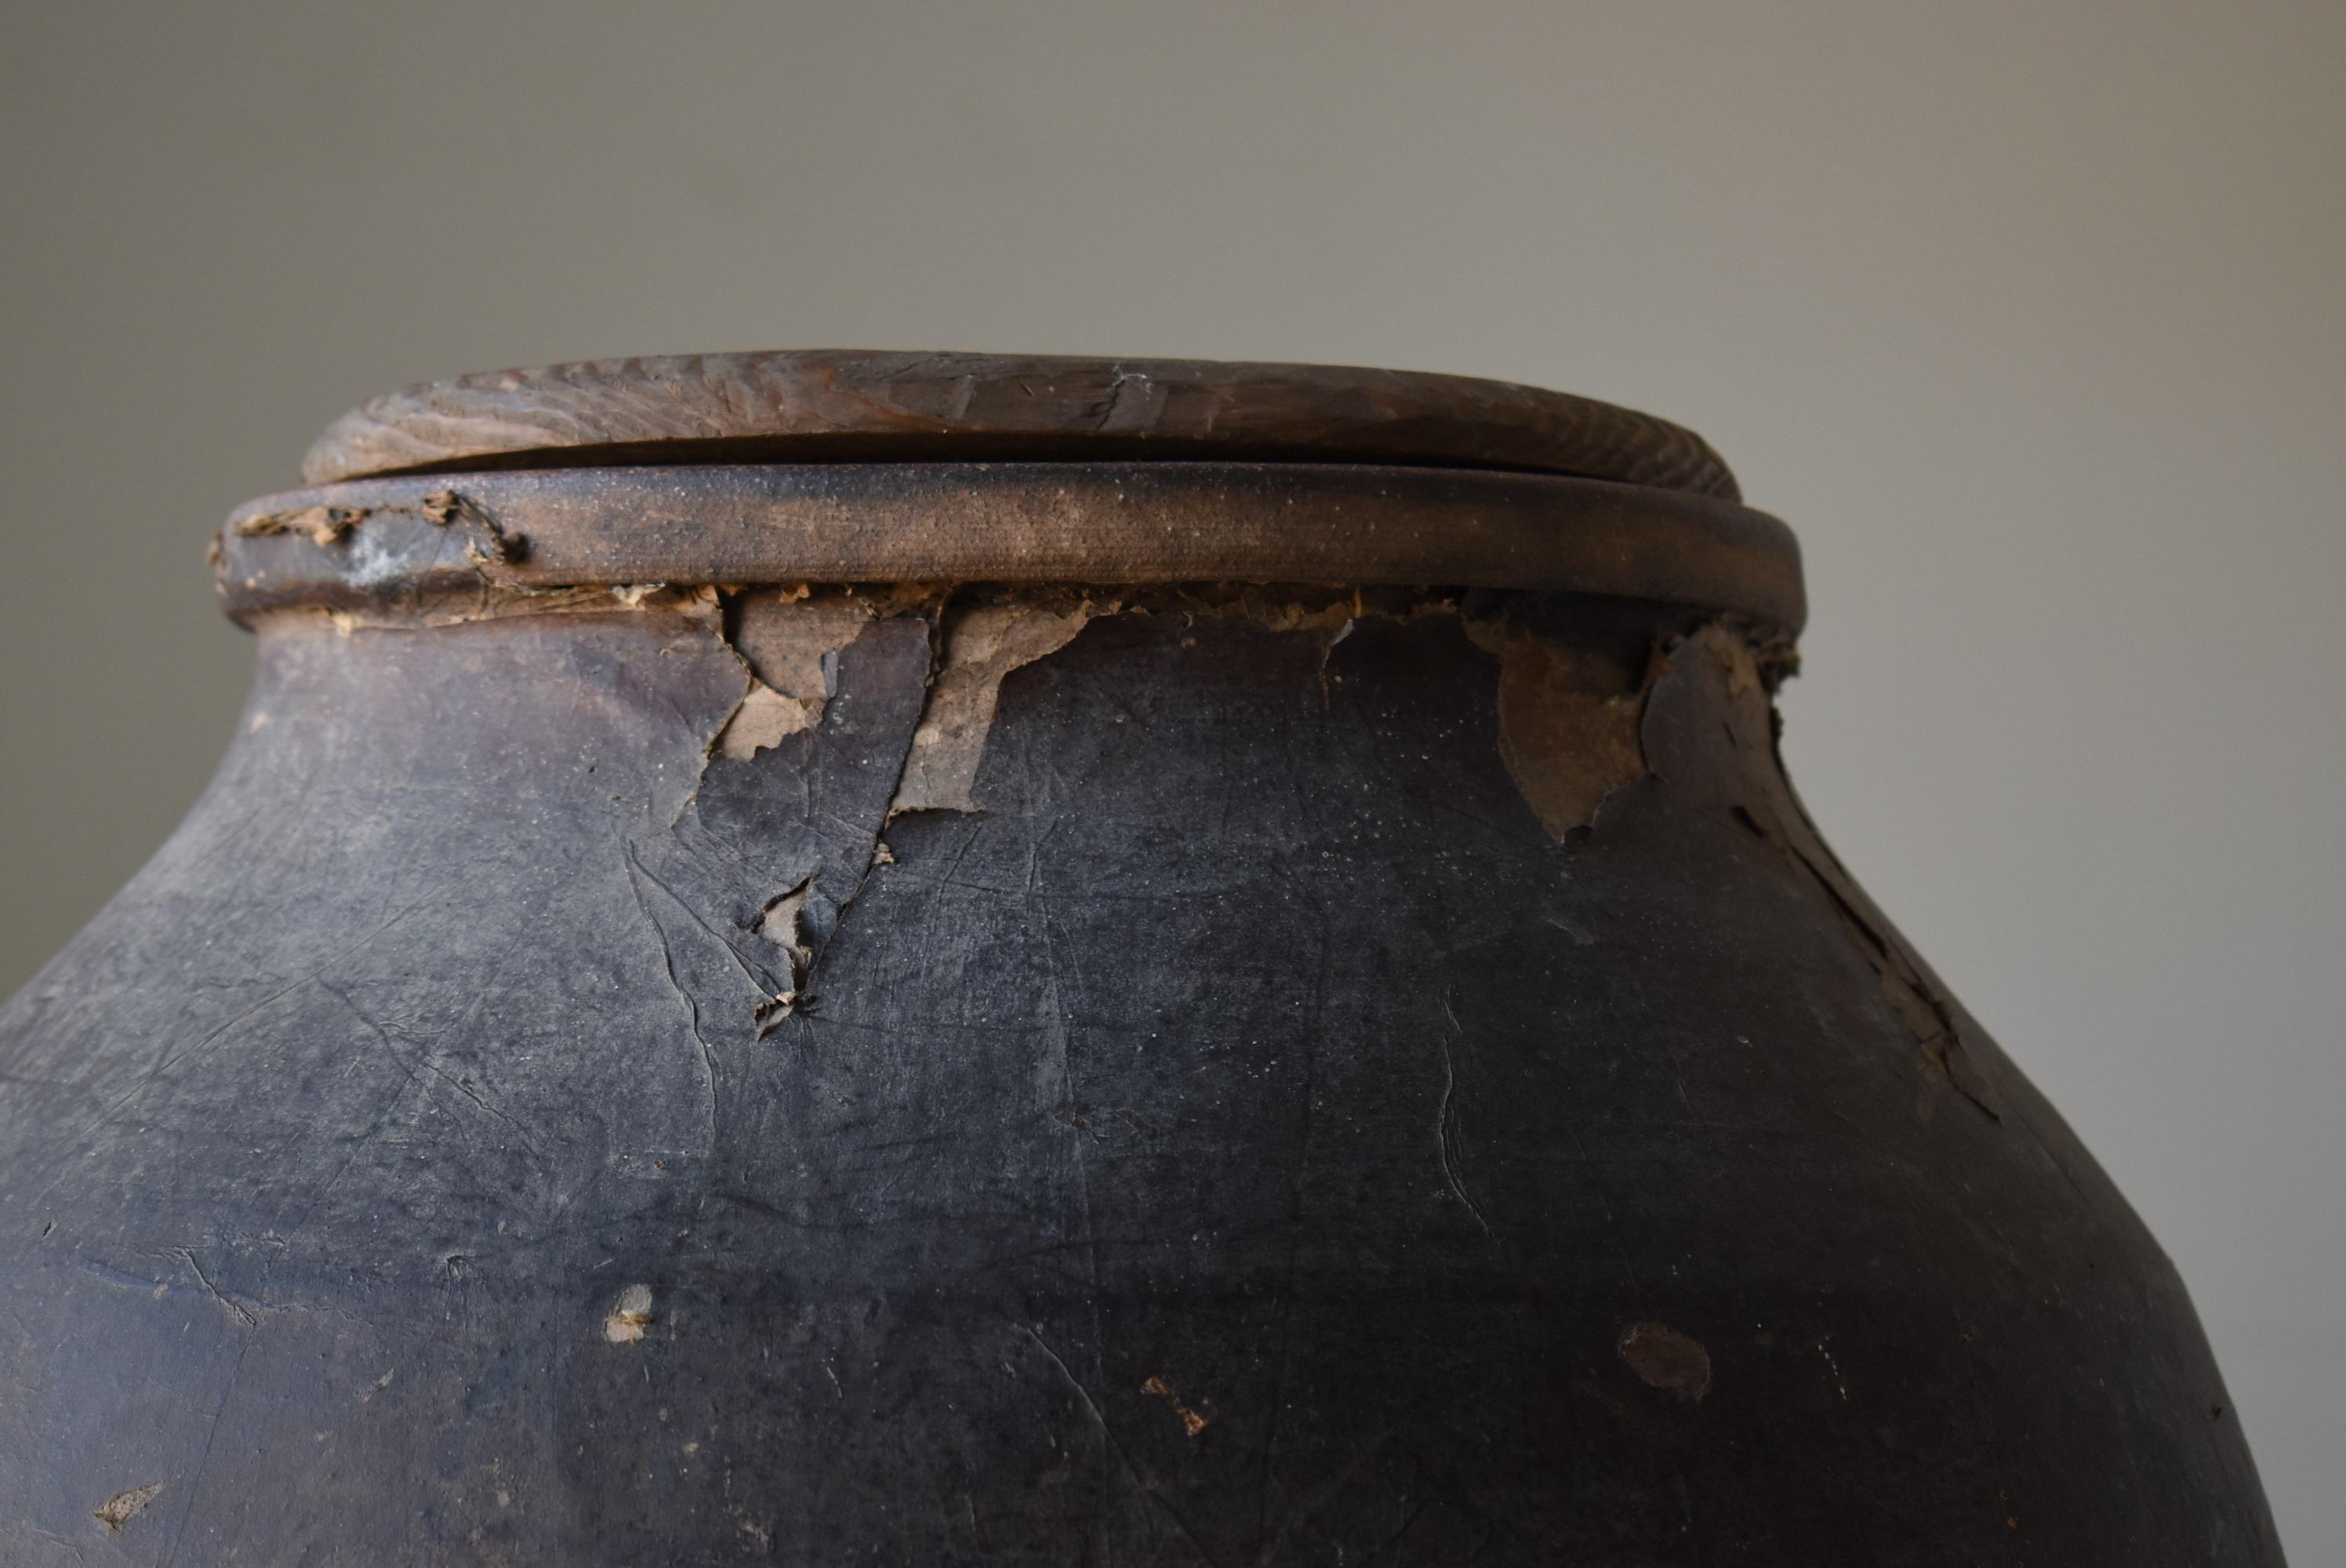 19th Century Japanese Old Pottery 1800s-1900s /Antique Tsubo Vessel Jar Flower Vase Wabisabi